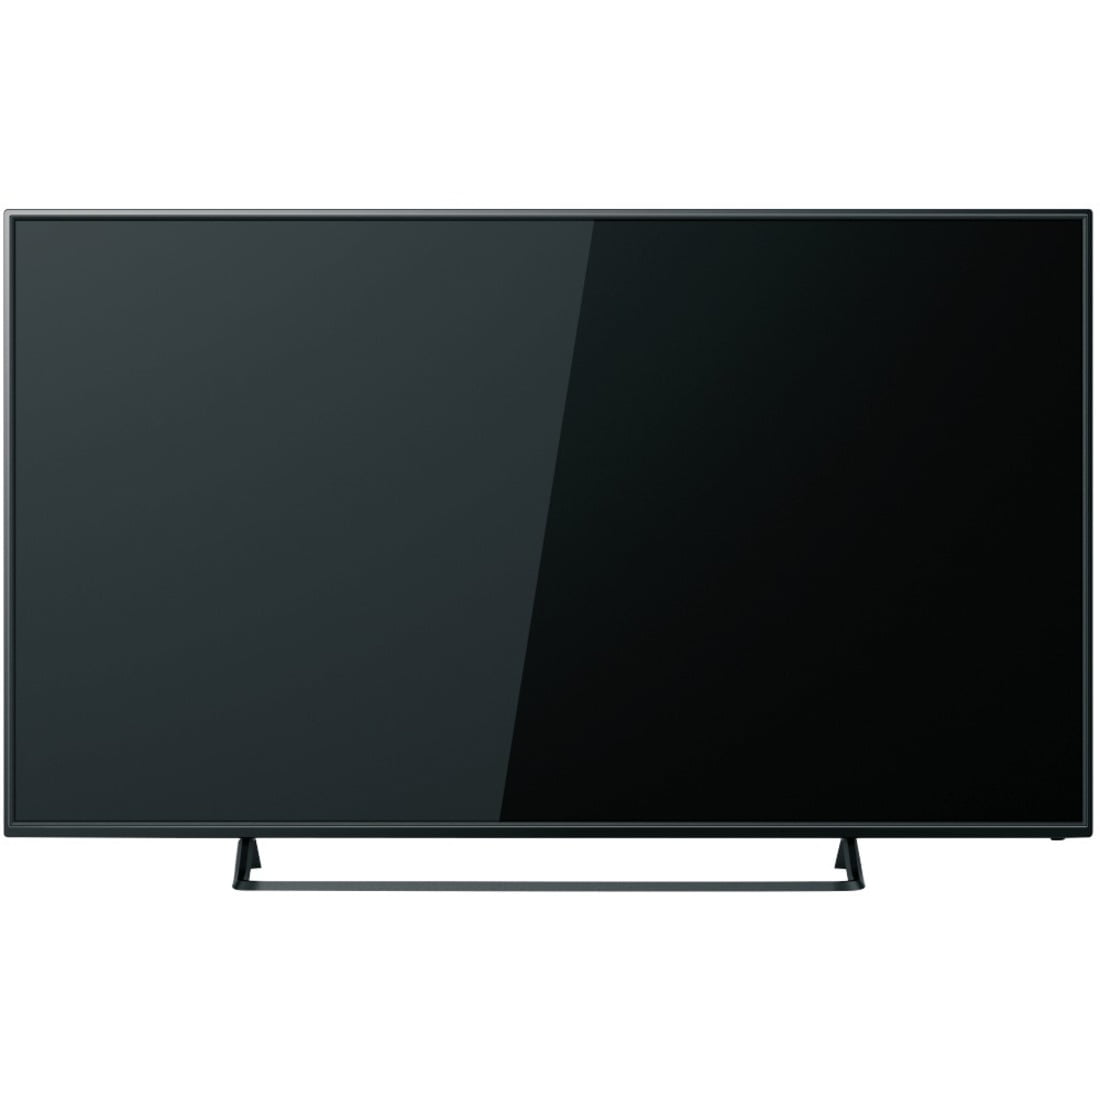 W Box 65 Class LED-LCD TV (65LED)